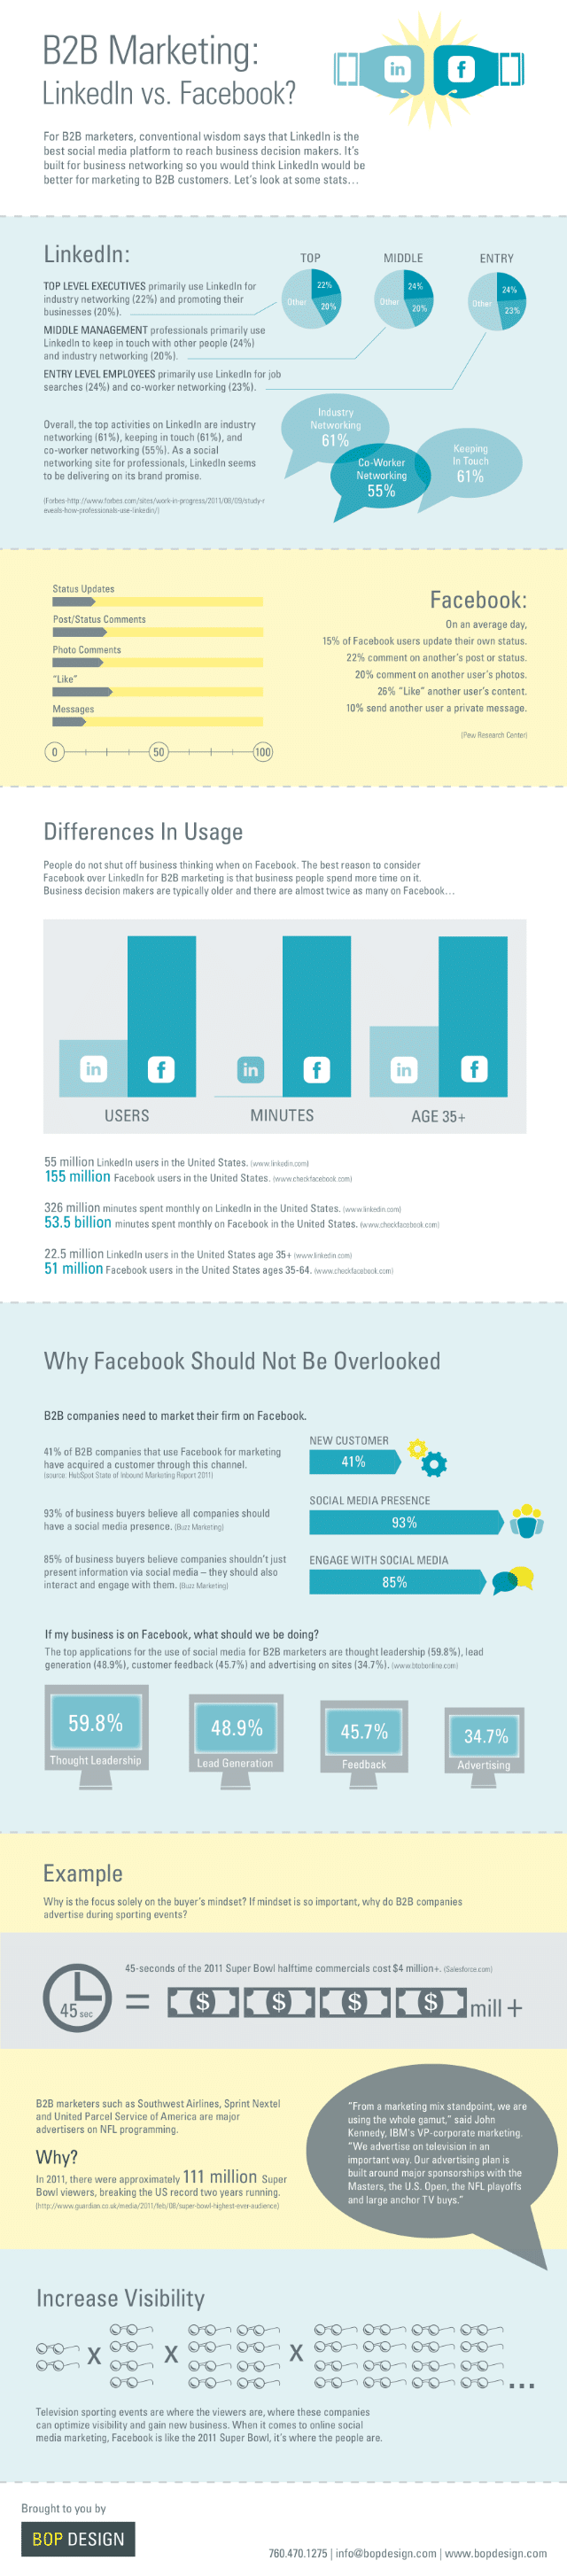 B2B Marketing: Facebook vs. LinkedIn [Infographic]